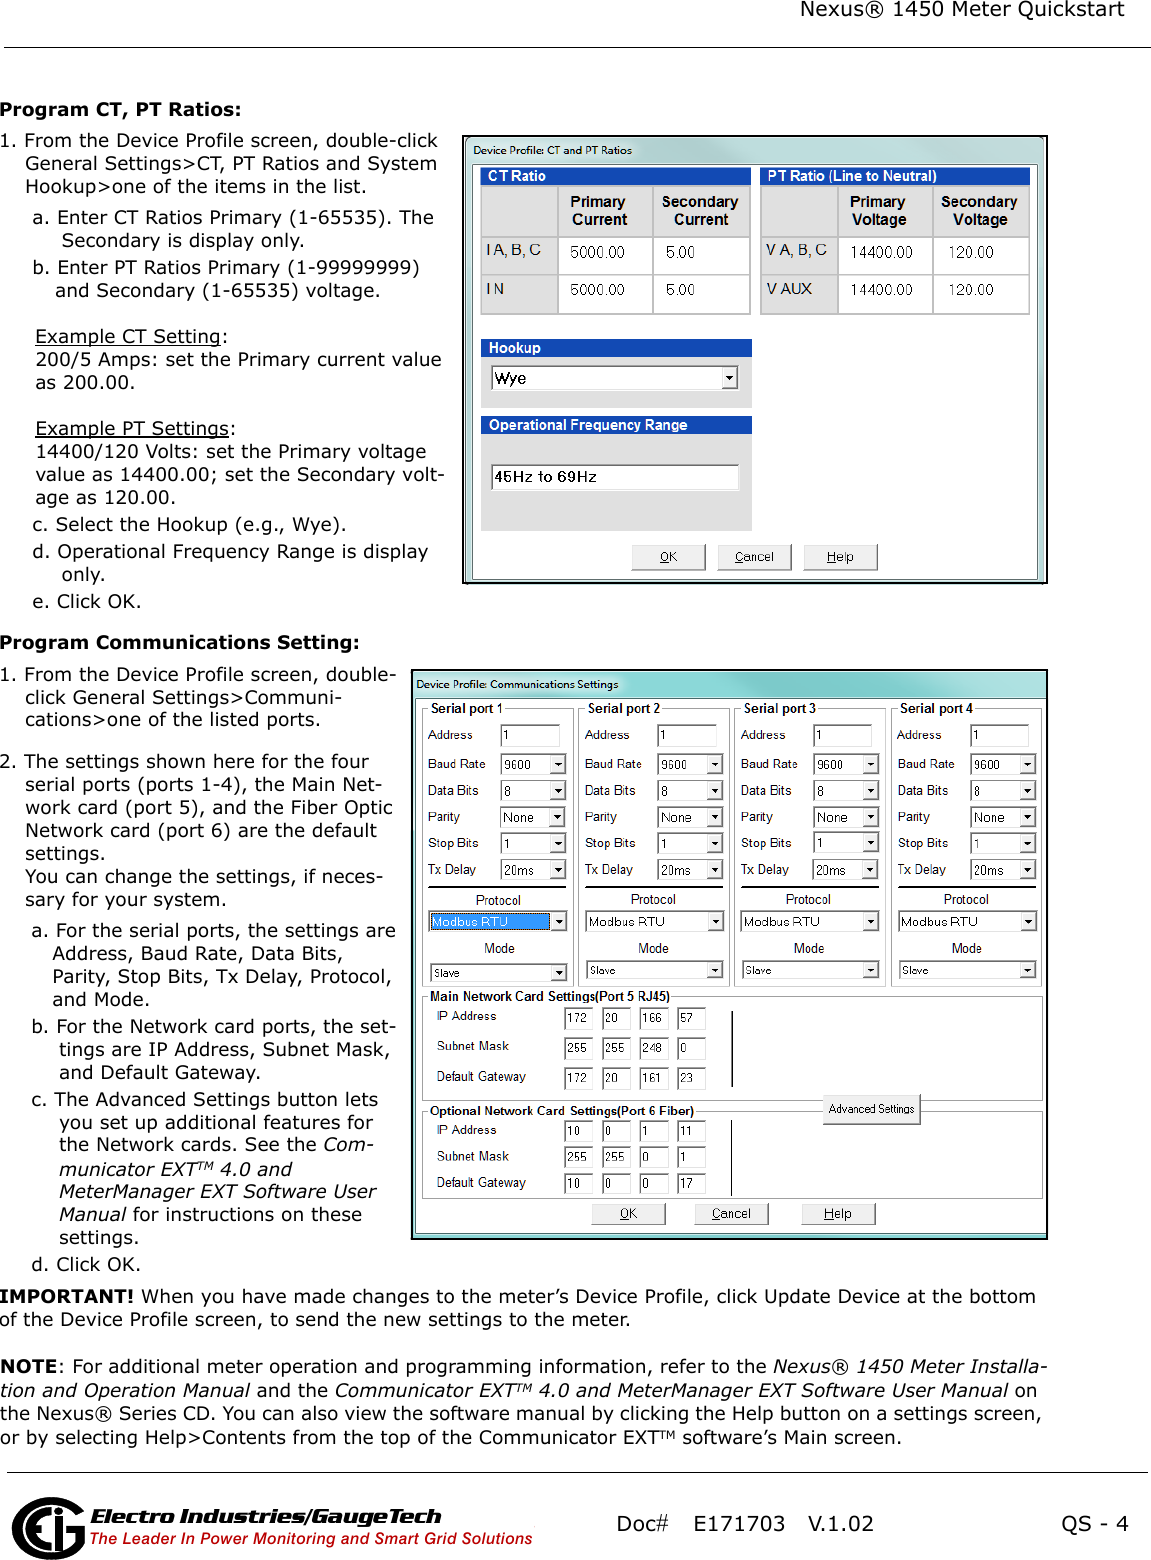 Page 4 of 4 - Nexus 1450 Meter QS Guide V.1.02 Nexus-1450-Meter-Quickstart-Guide E171703